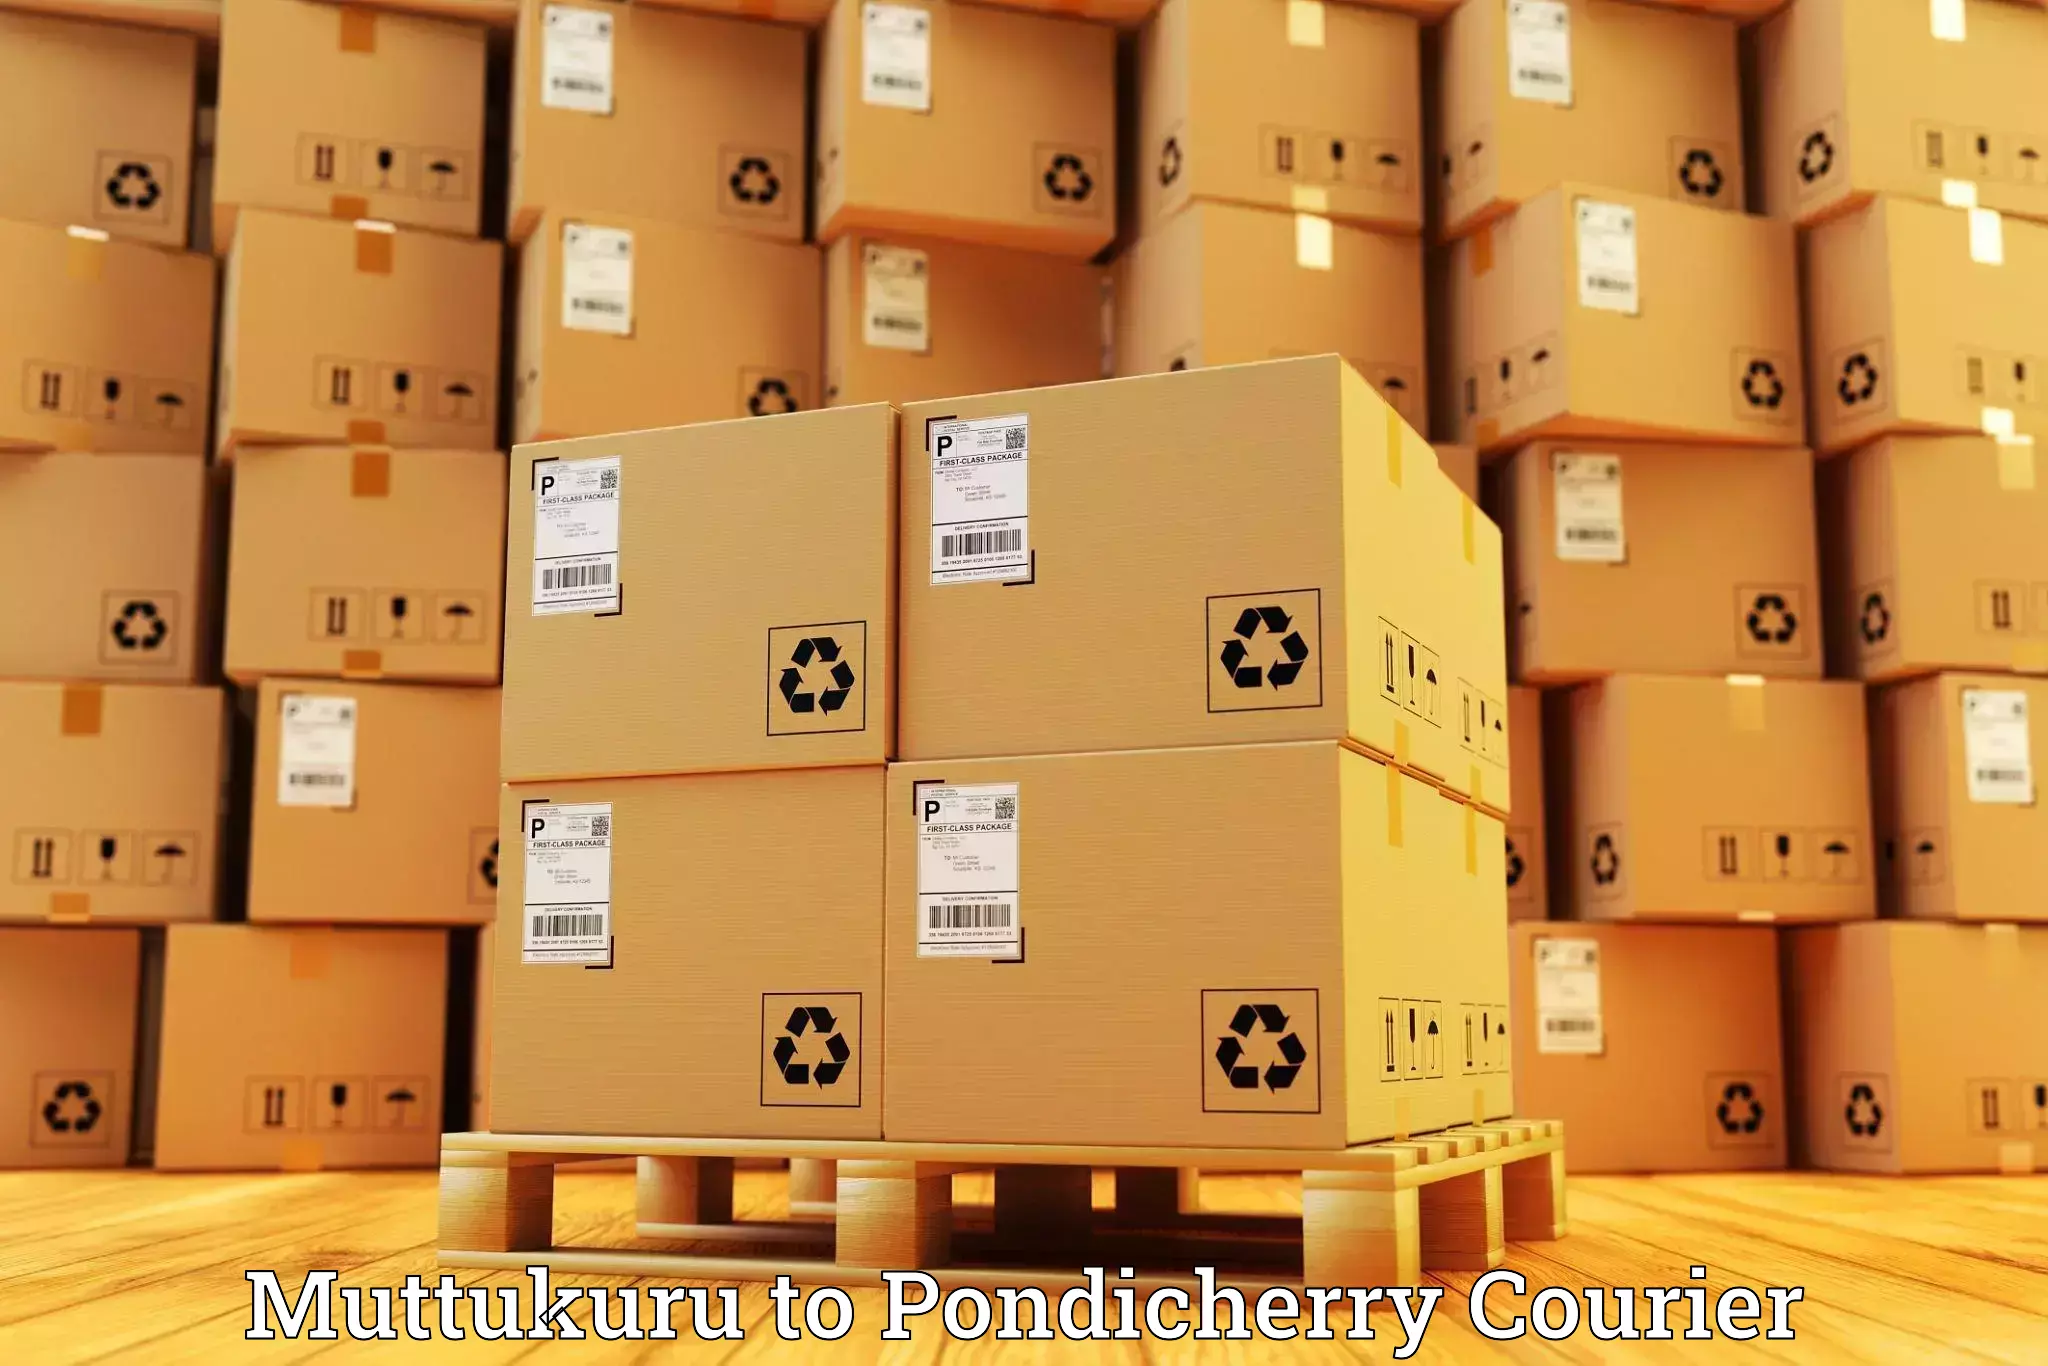 State-of-the-art courier technology Muttukuru to Pondicherry